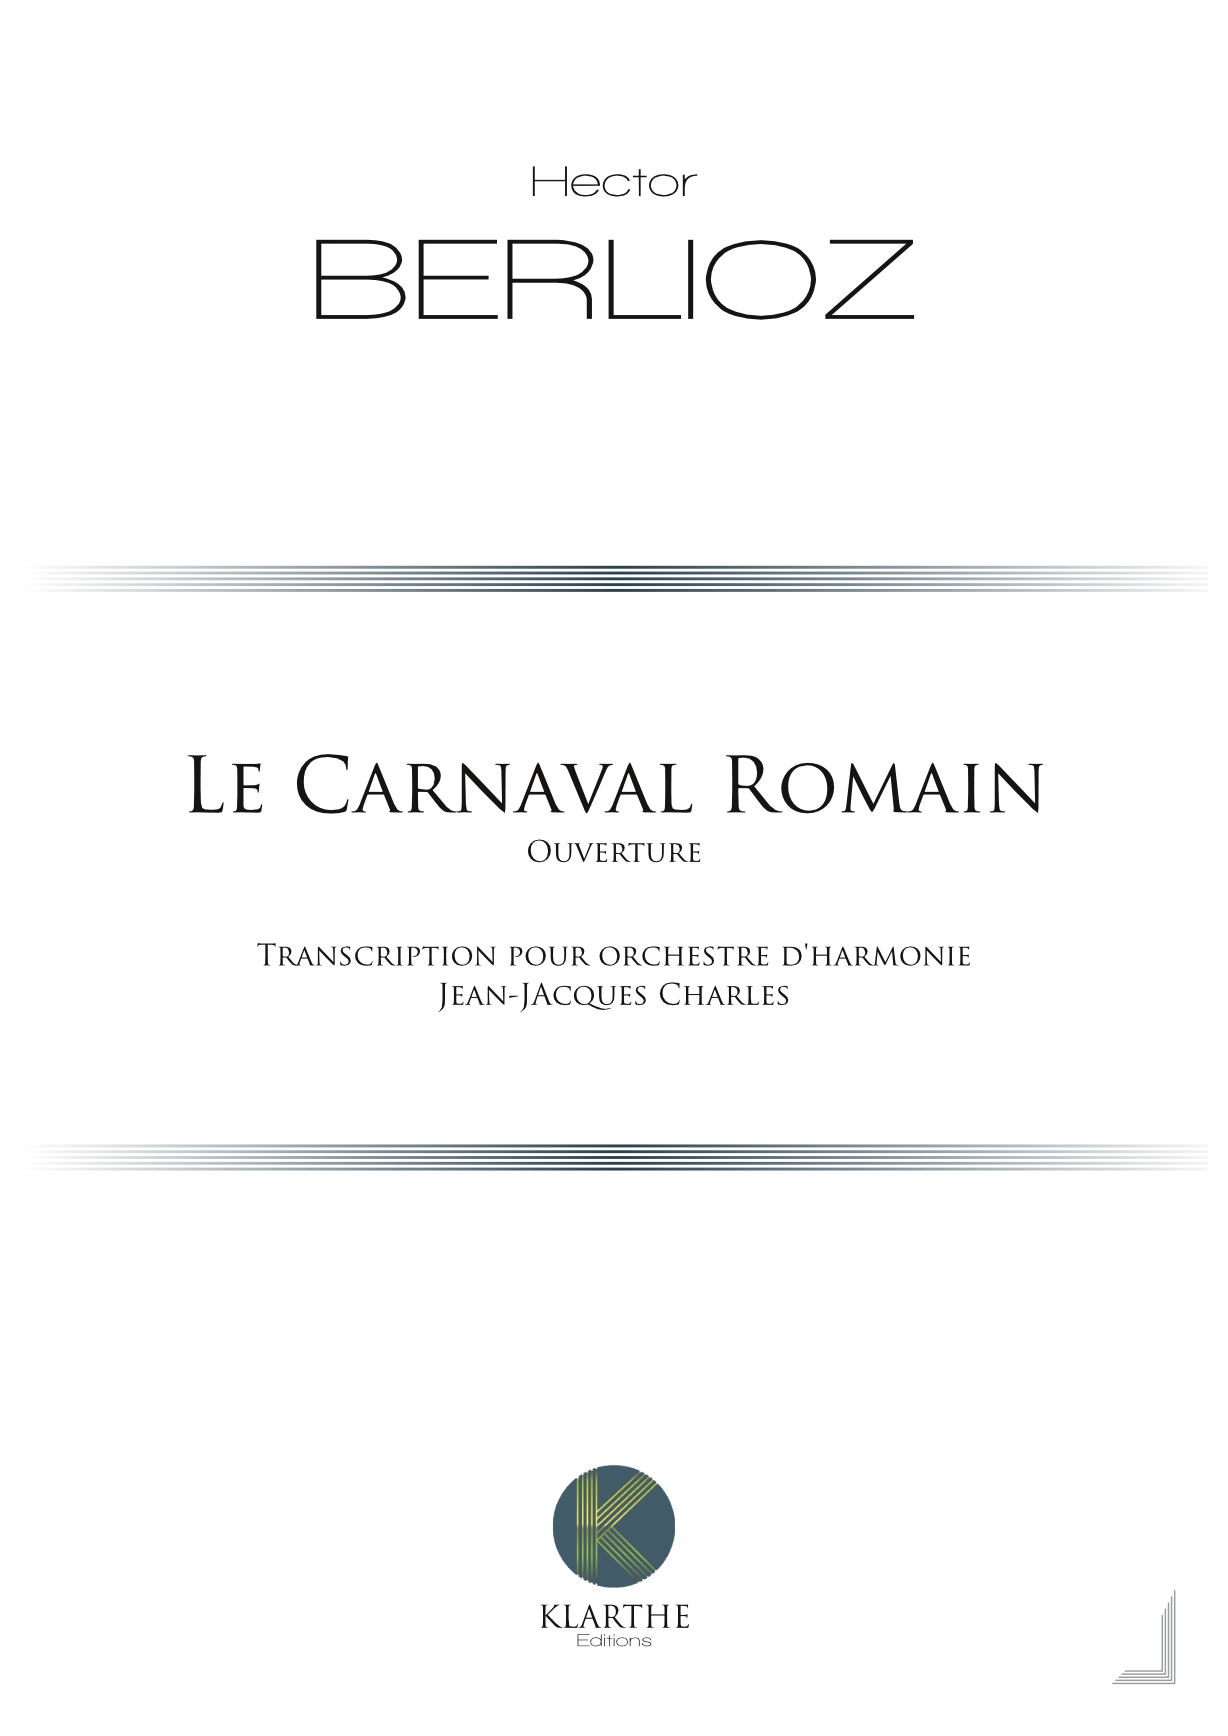 Ouverture du Carnaval Romain (BERLIOZ HECTOR)